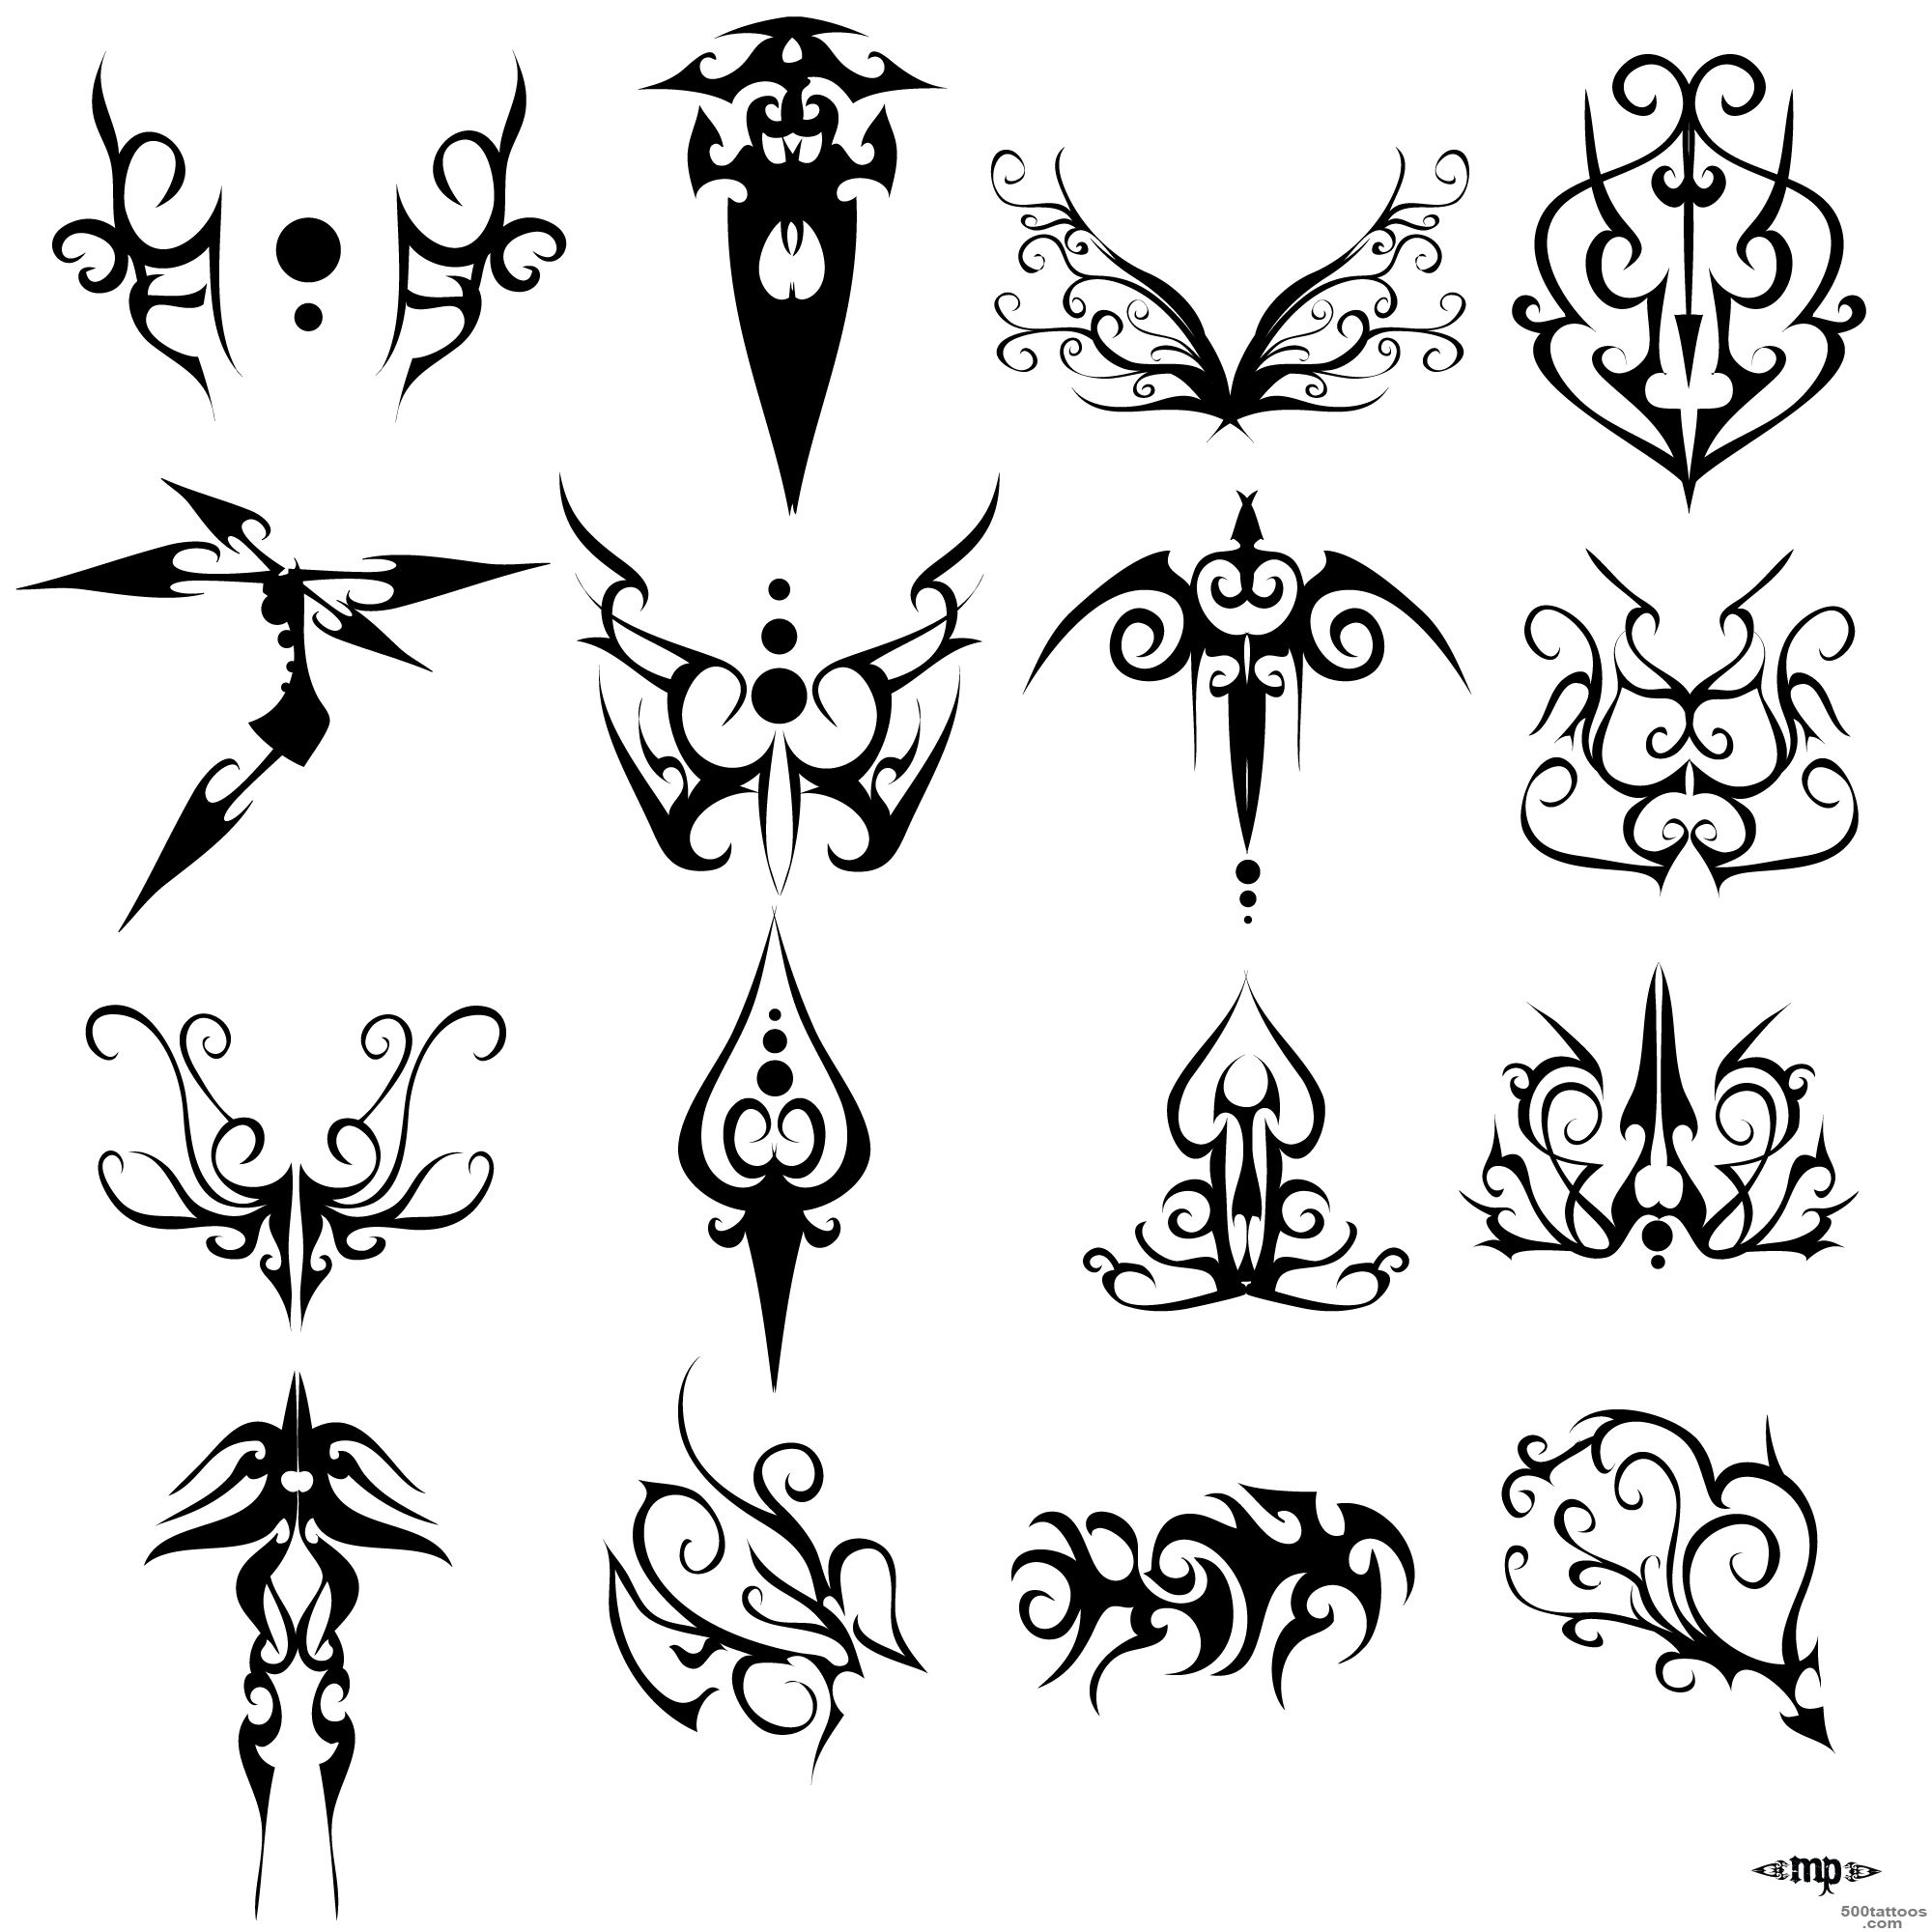 DeviantArt-More-Like-Simple-tattoo-design-by-Hassassin_36.jpg